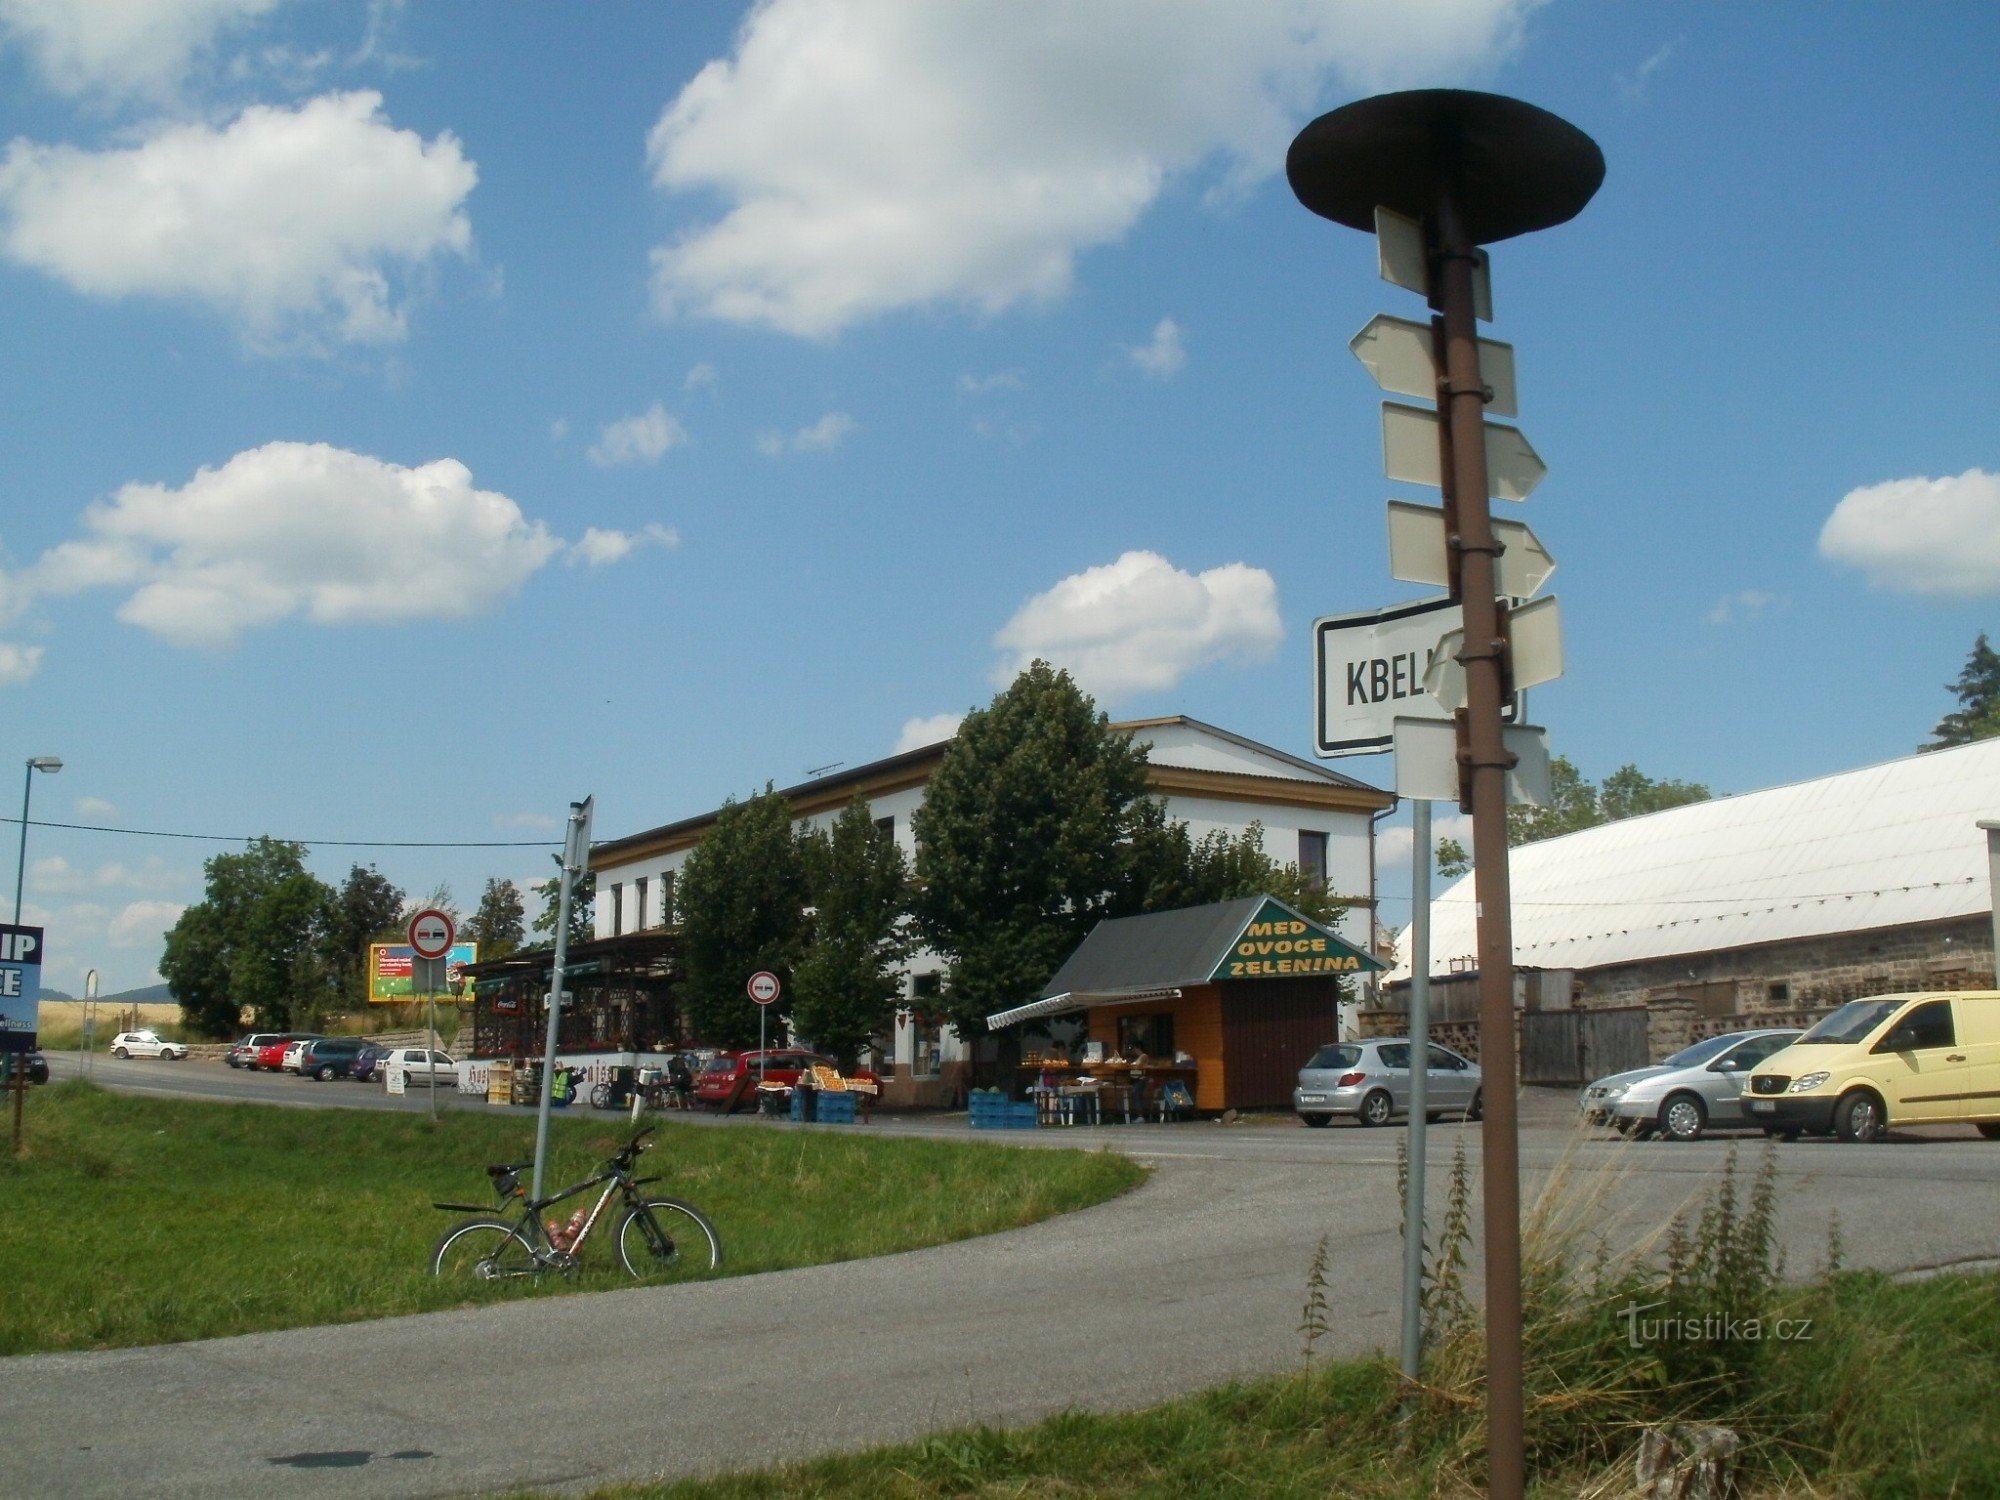 turistično križišče Kbelnice - U Rumcajse